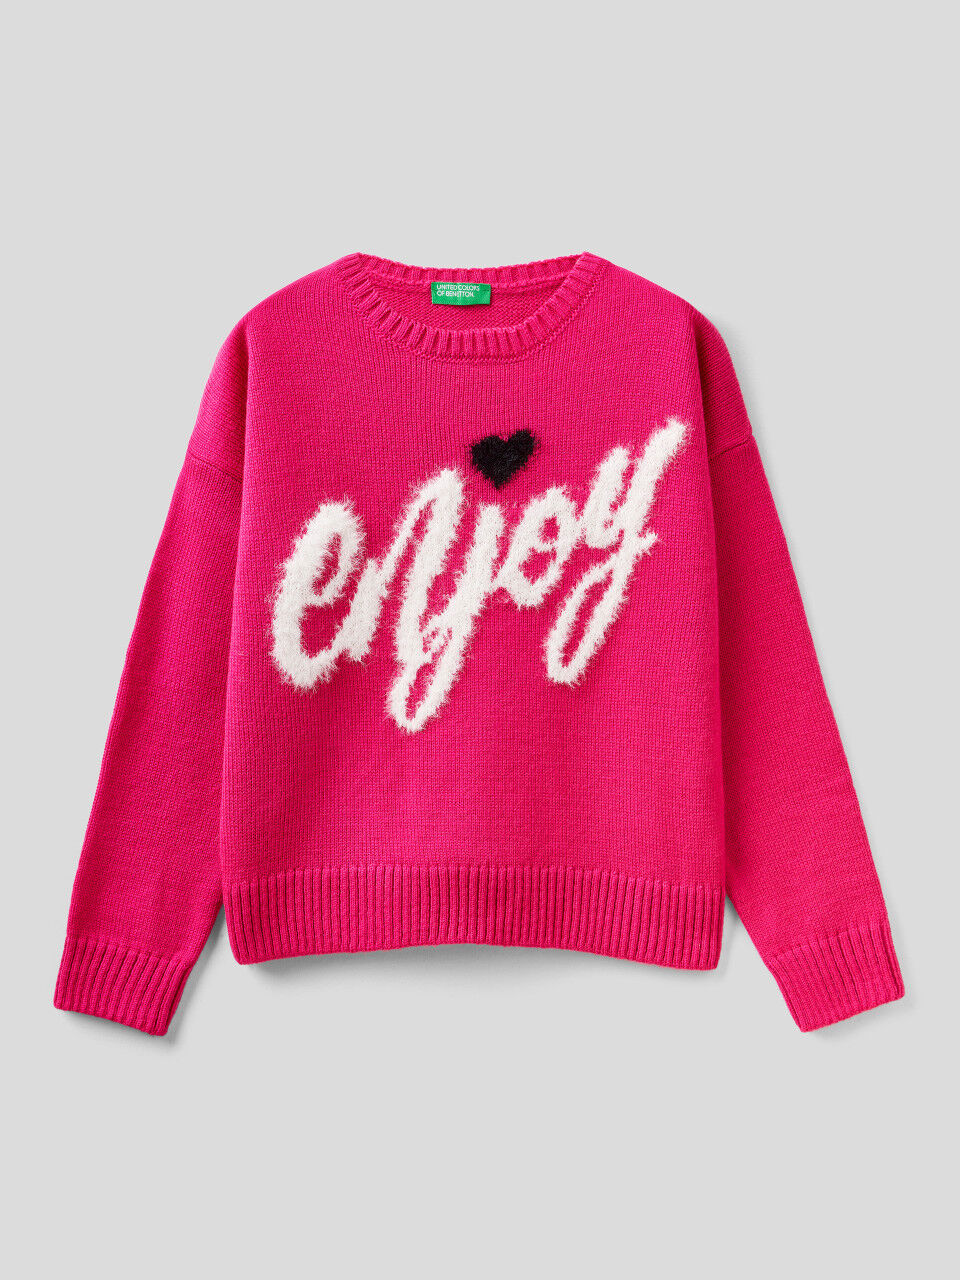 United colors of benetton cardigan Pink 74                  EU KIDS FASHION Jumpers & Sweatshirts Elegant discount 83% 